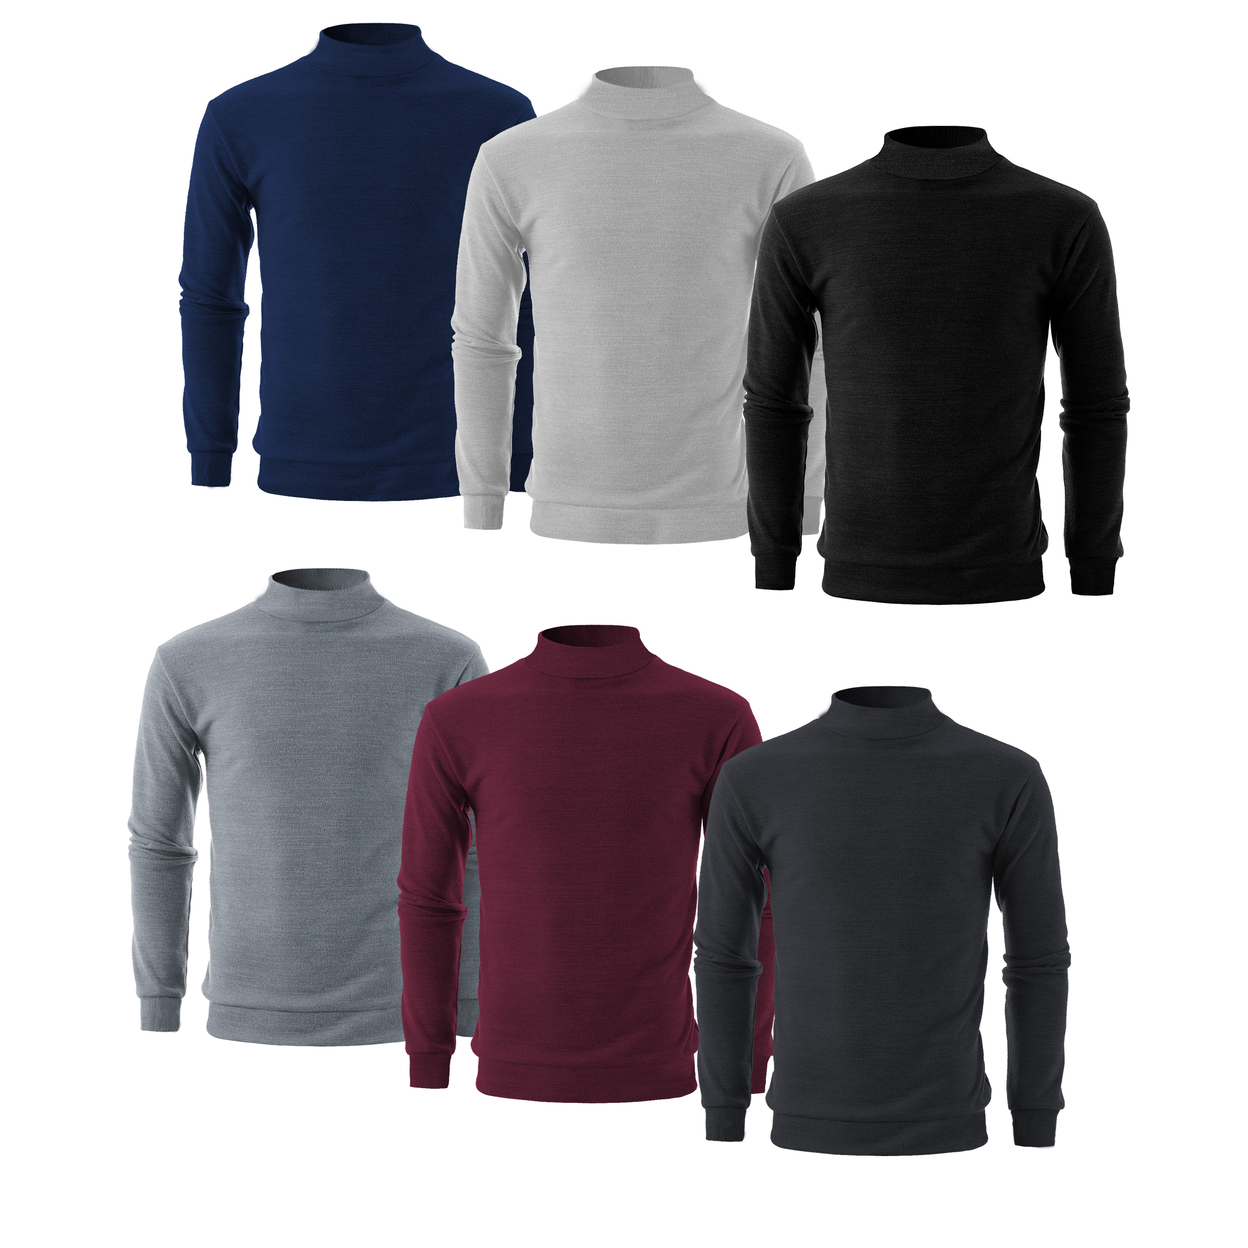 Men's Winter Warm Cozy Knit Slim-Fit Mock Neck Sweater - White, Medium